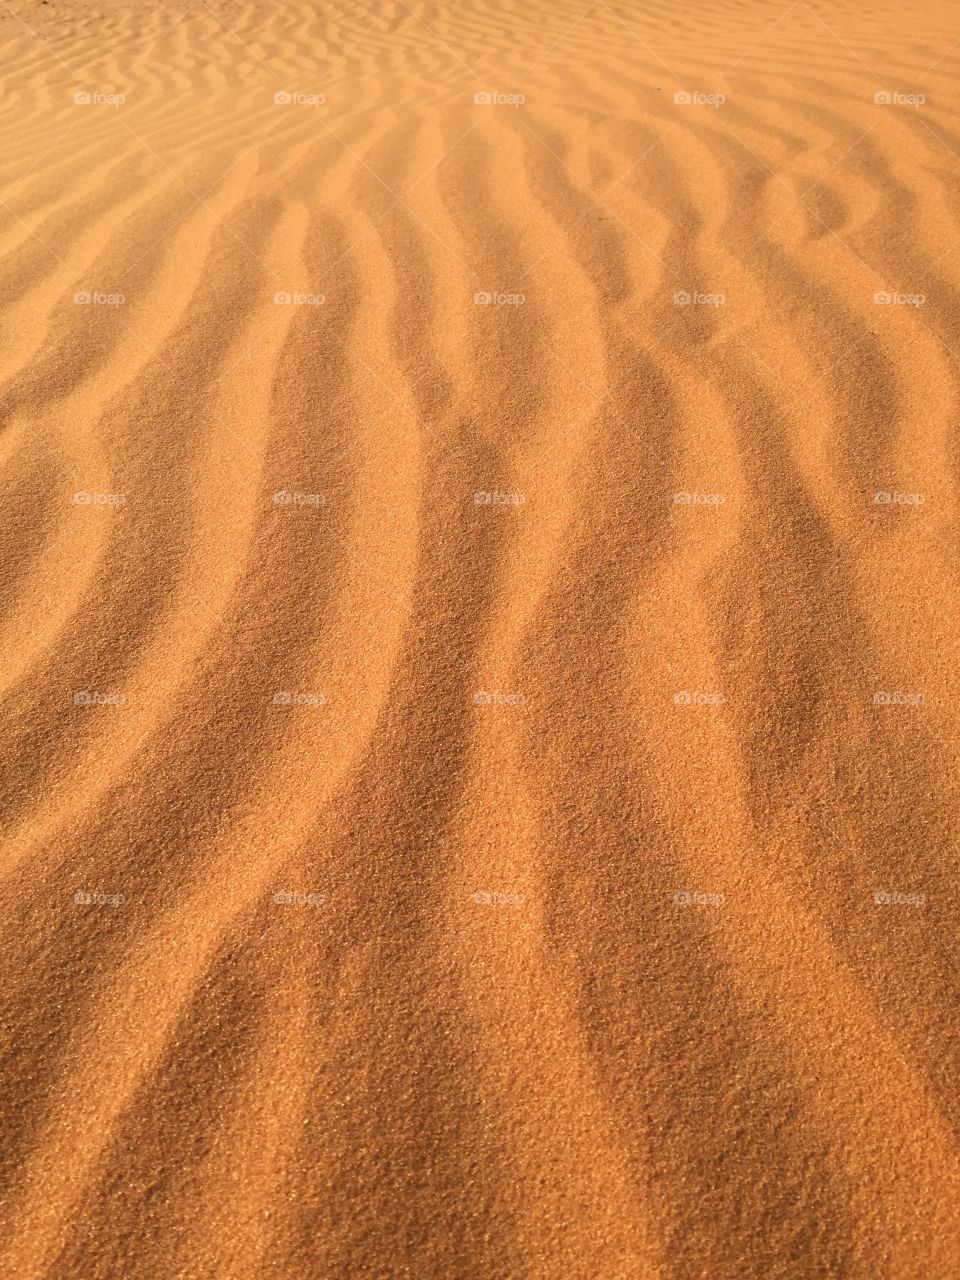 Sand way